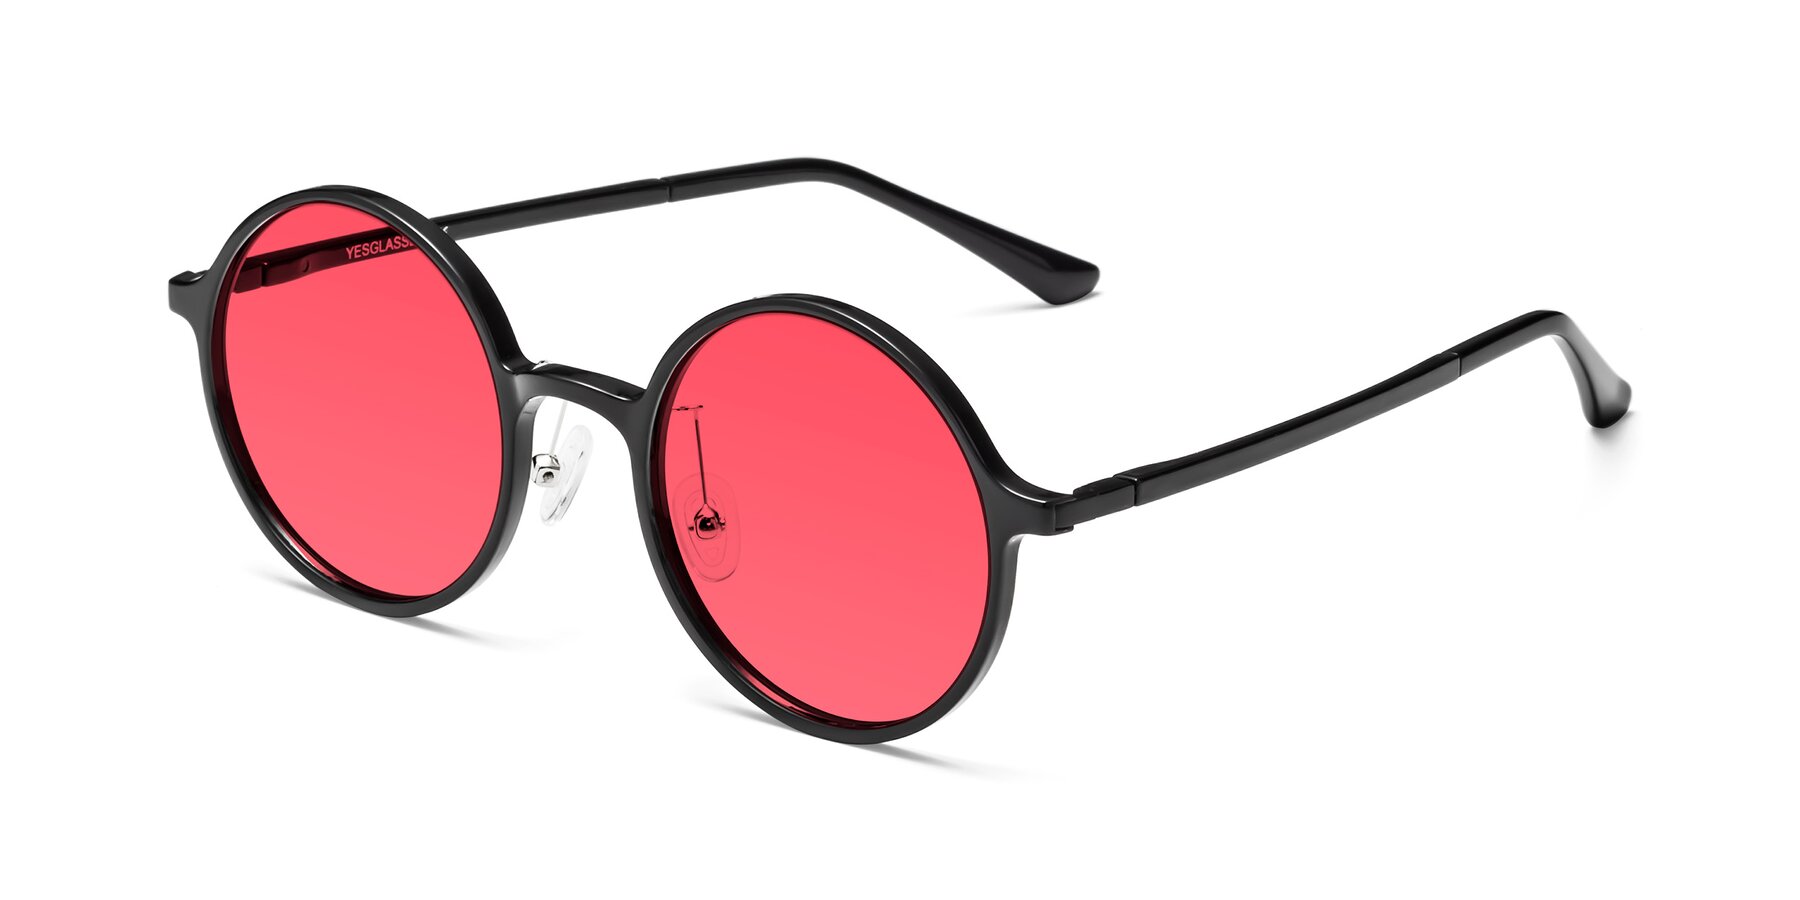 Sophie liberaal Ligatie Black Retro-Vintage Thin Round Tinted Sunglasses with Red Sunwear Lenses -  Lemon